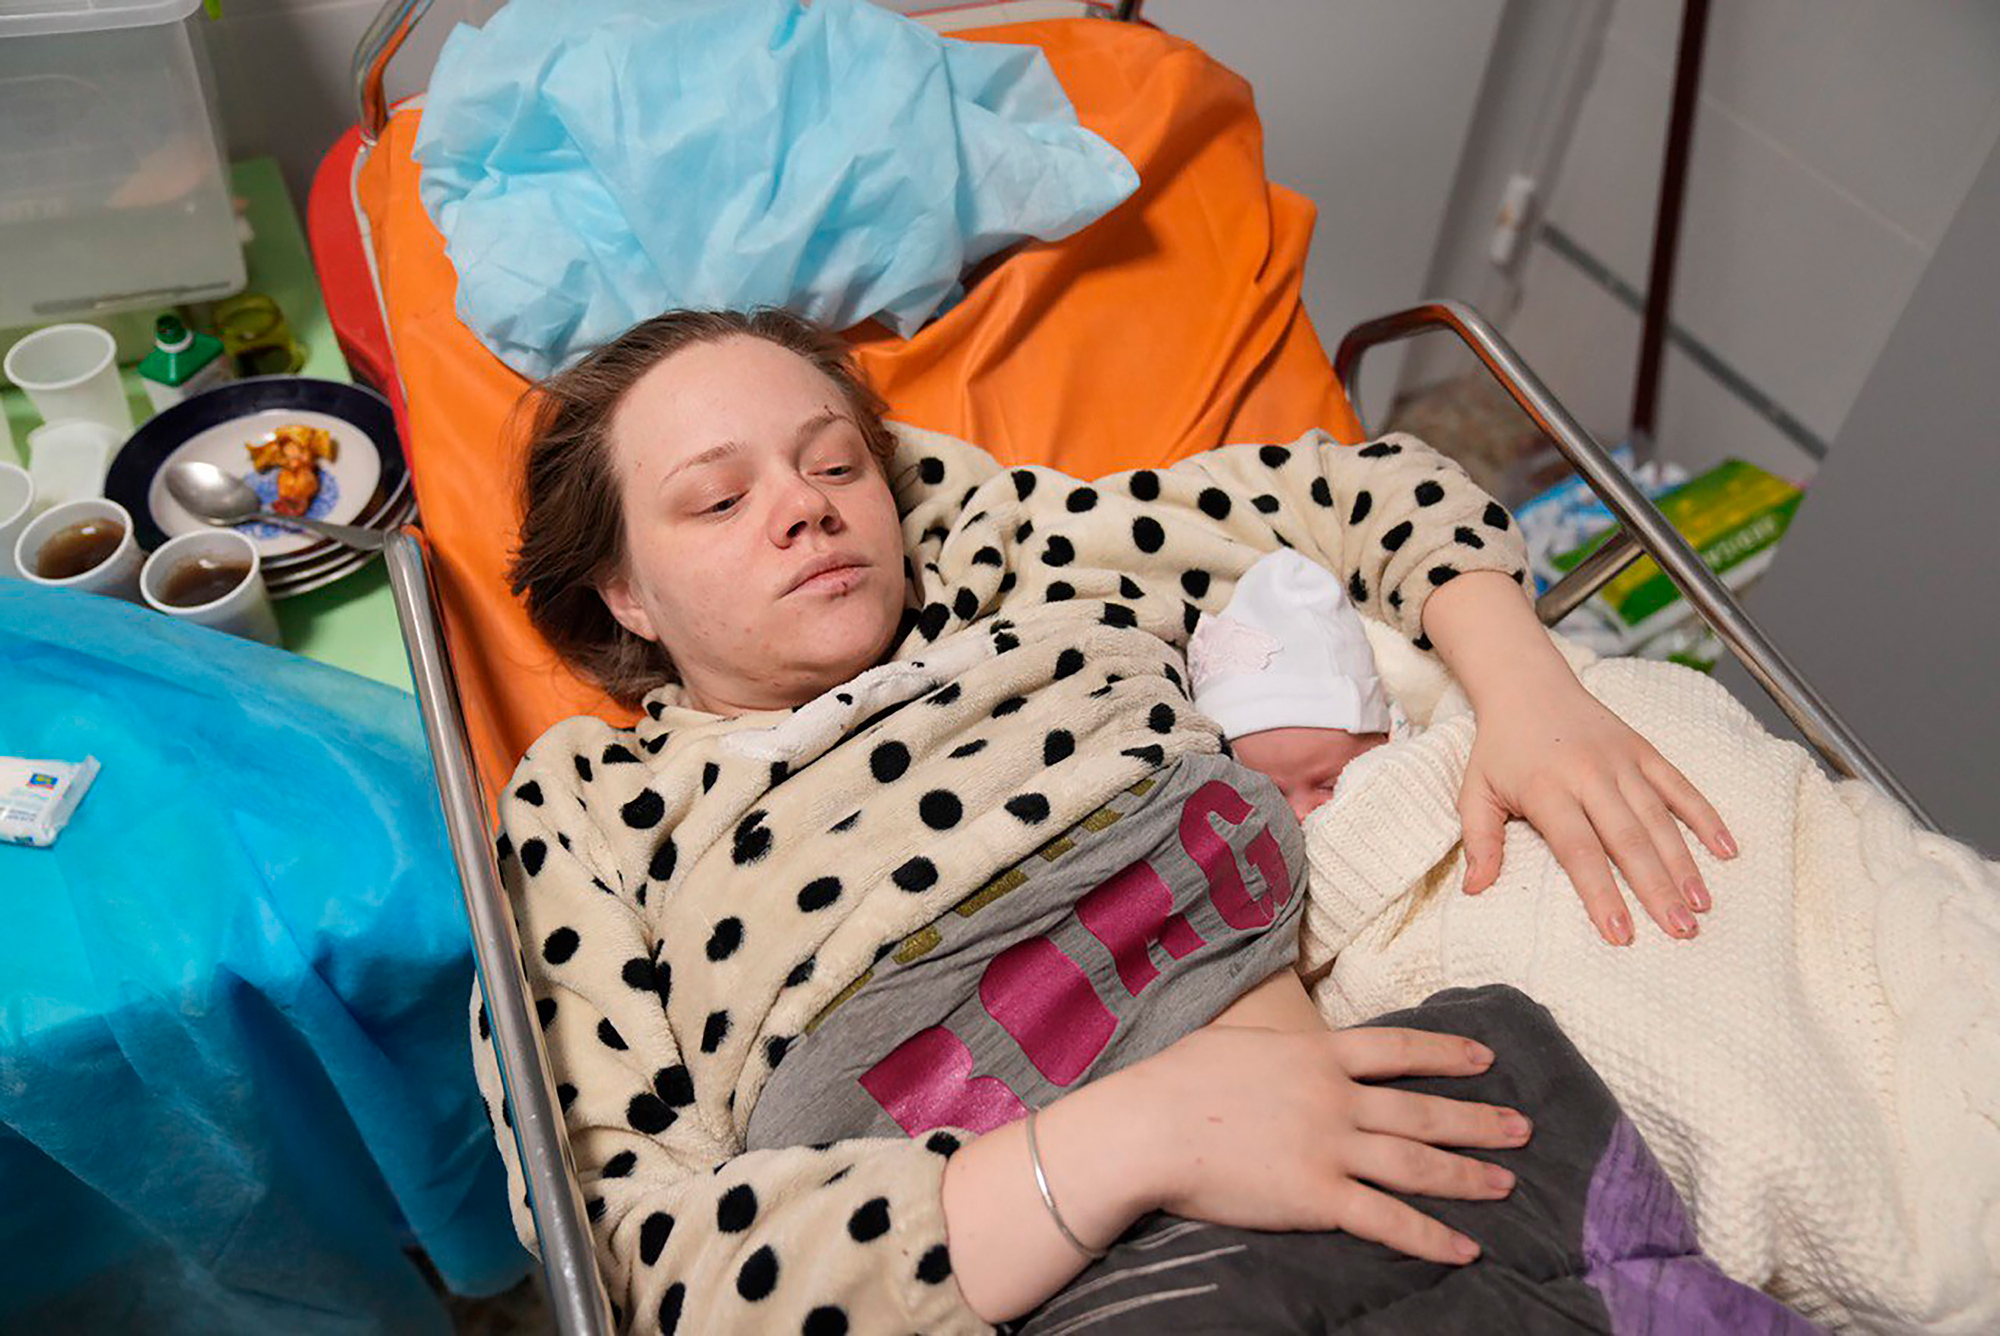 Vishegirskaya lies in a hospital bed after giving birth to her daughter Veronika on Friday in Mariupol. (Evgeniy Maloletka/AP)